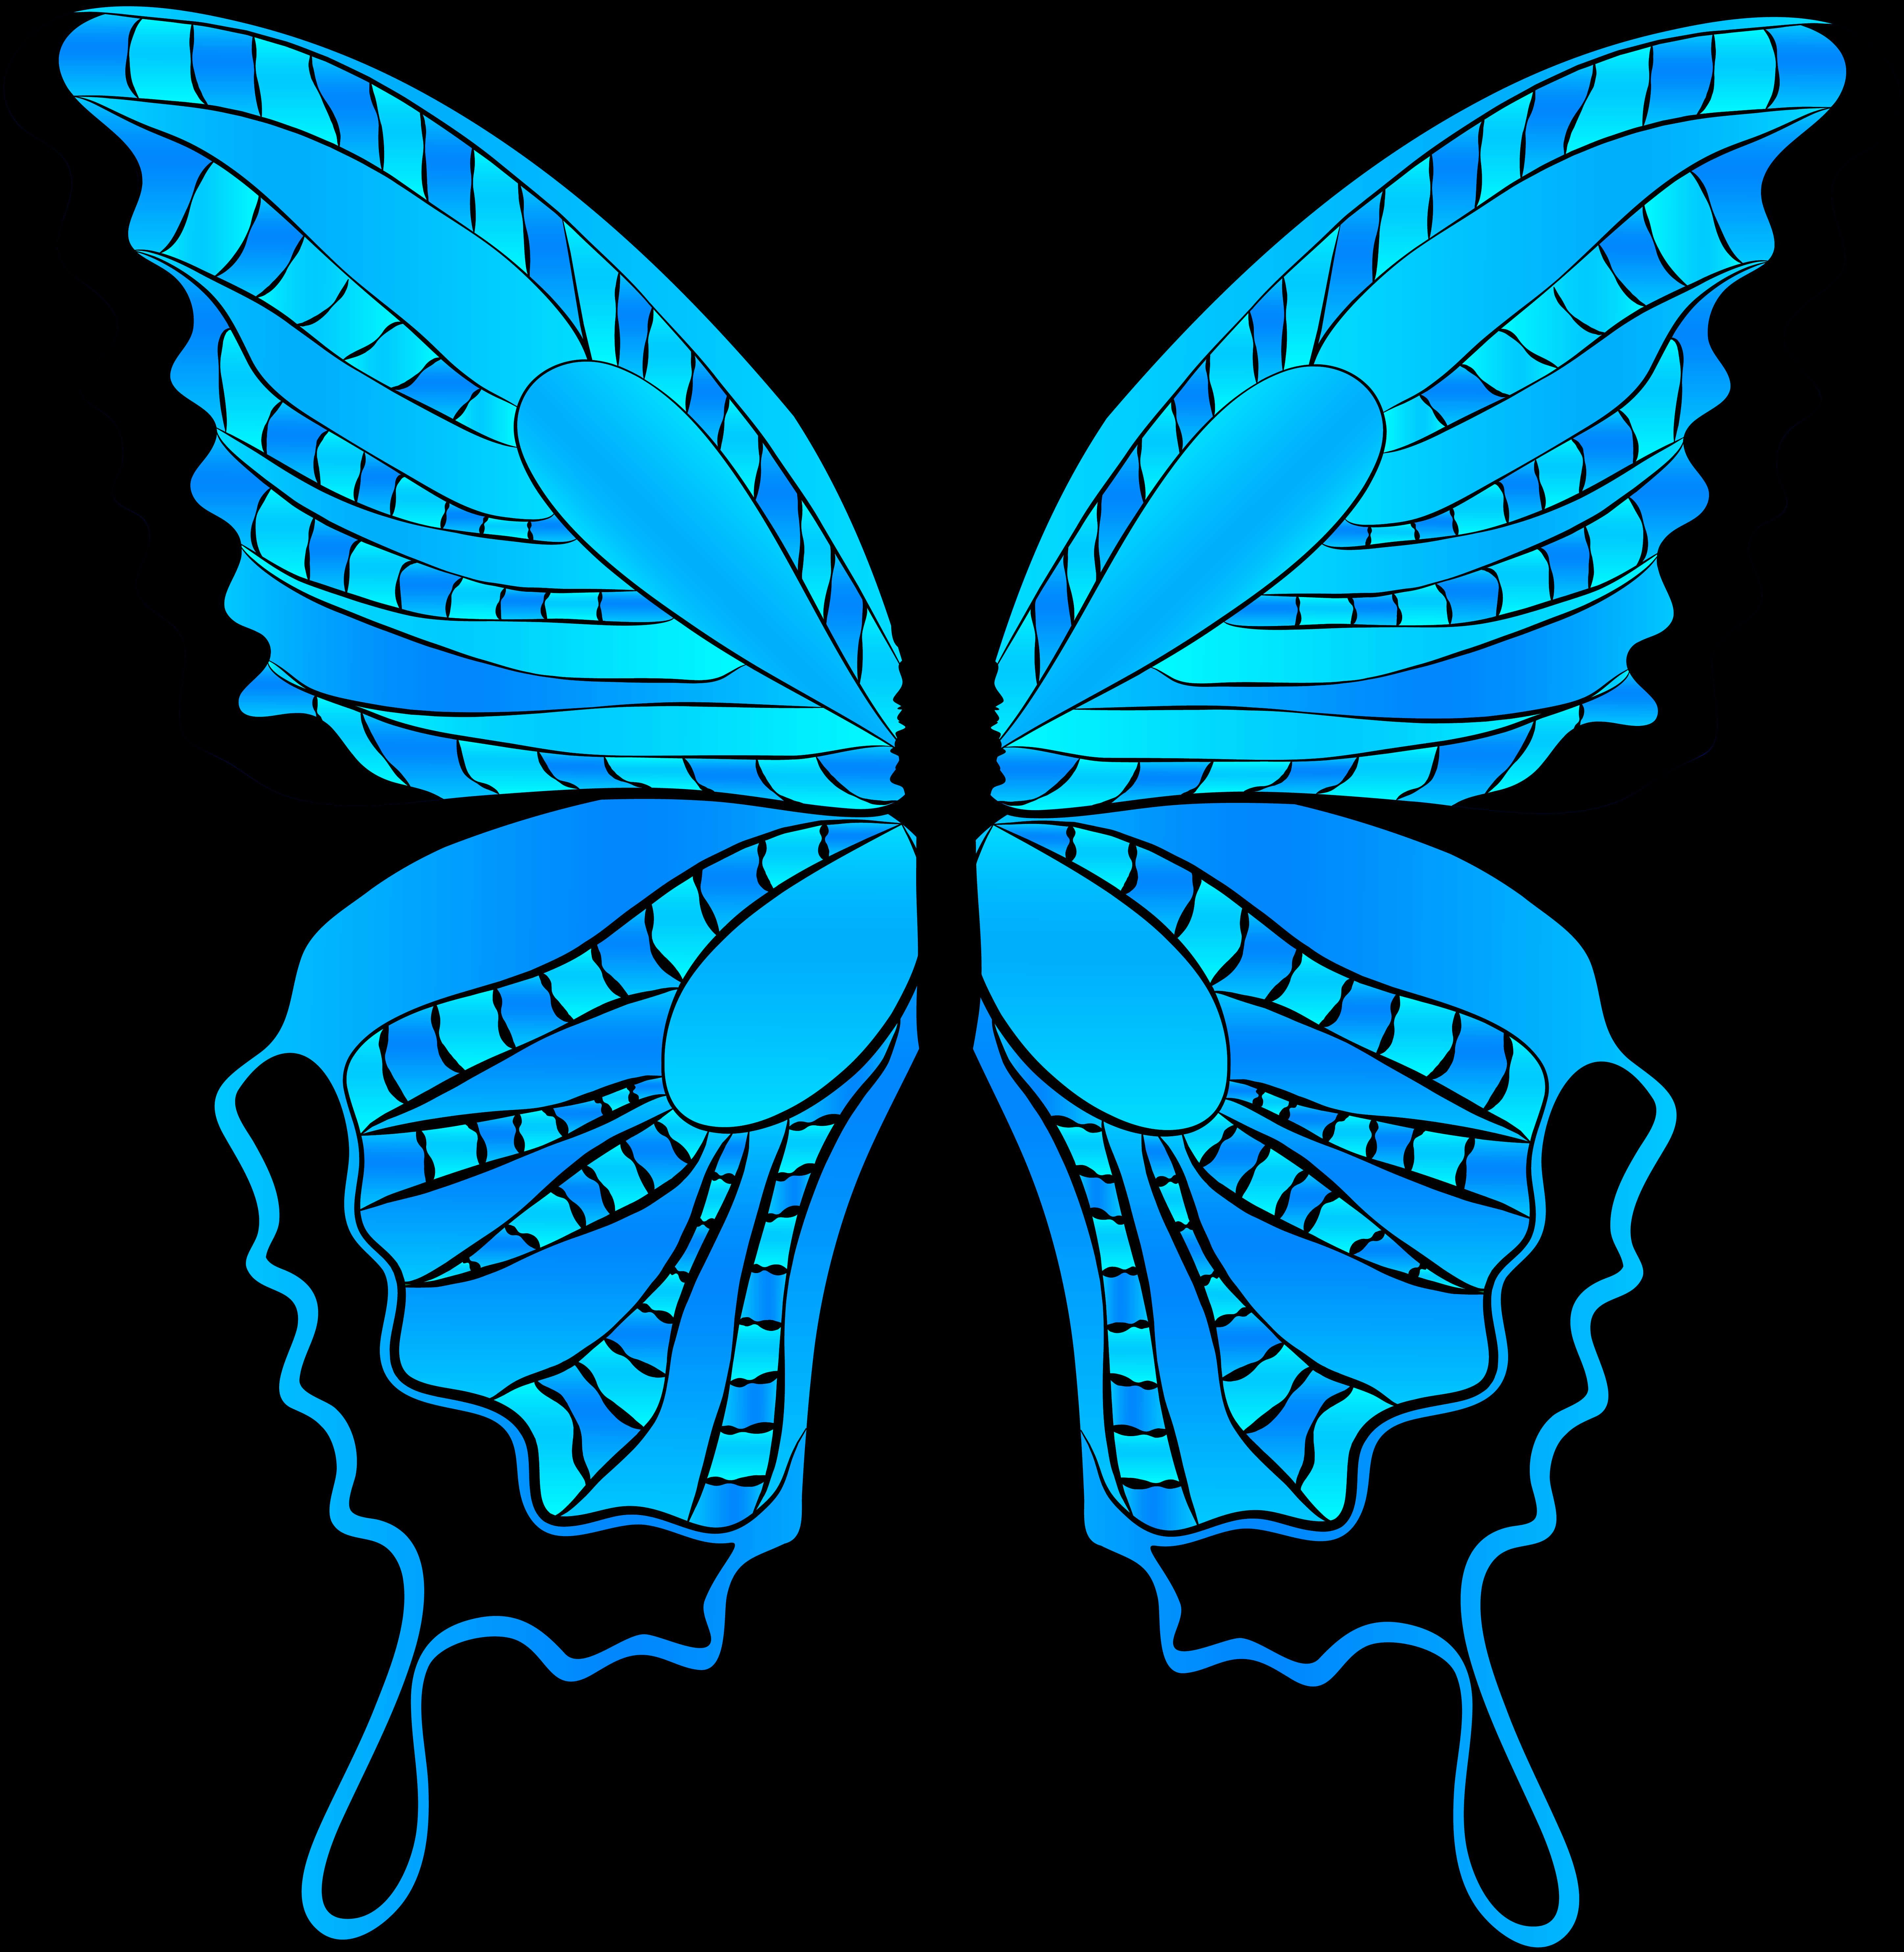 Vibrant Blue Butterfly Illustration